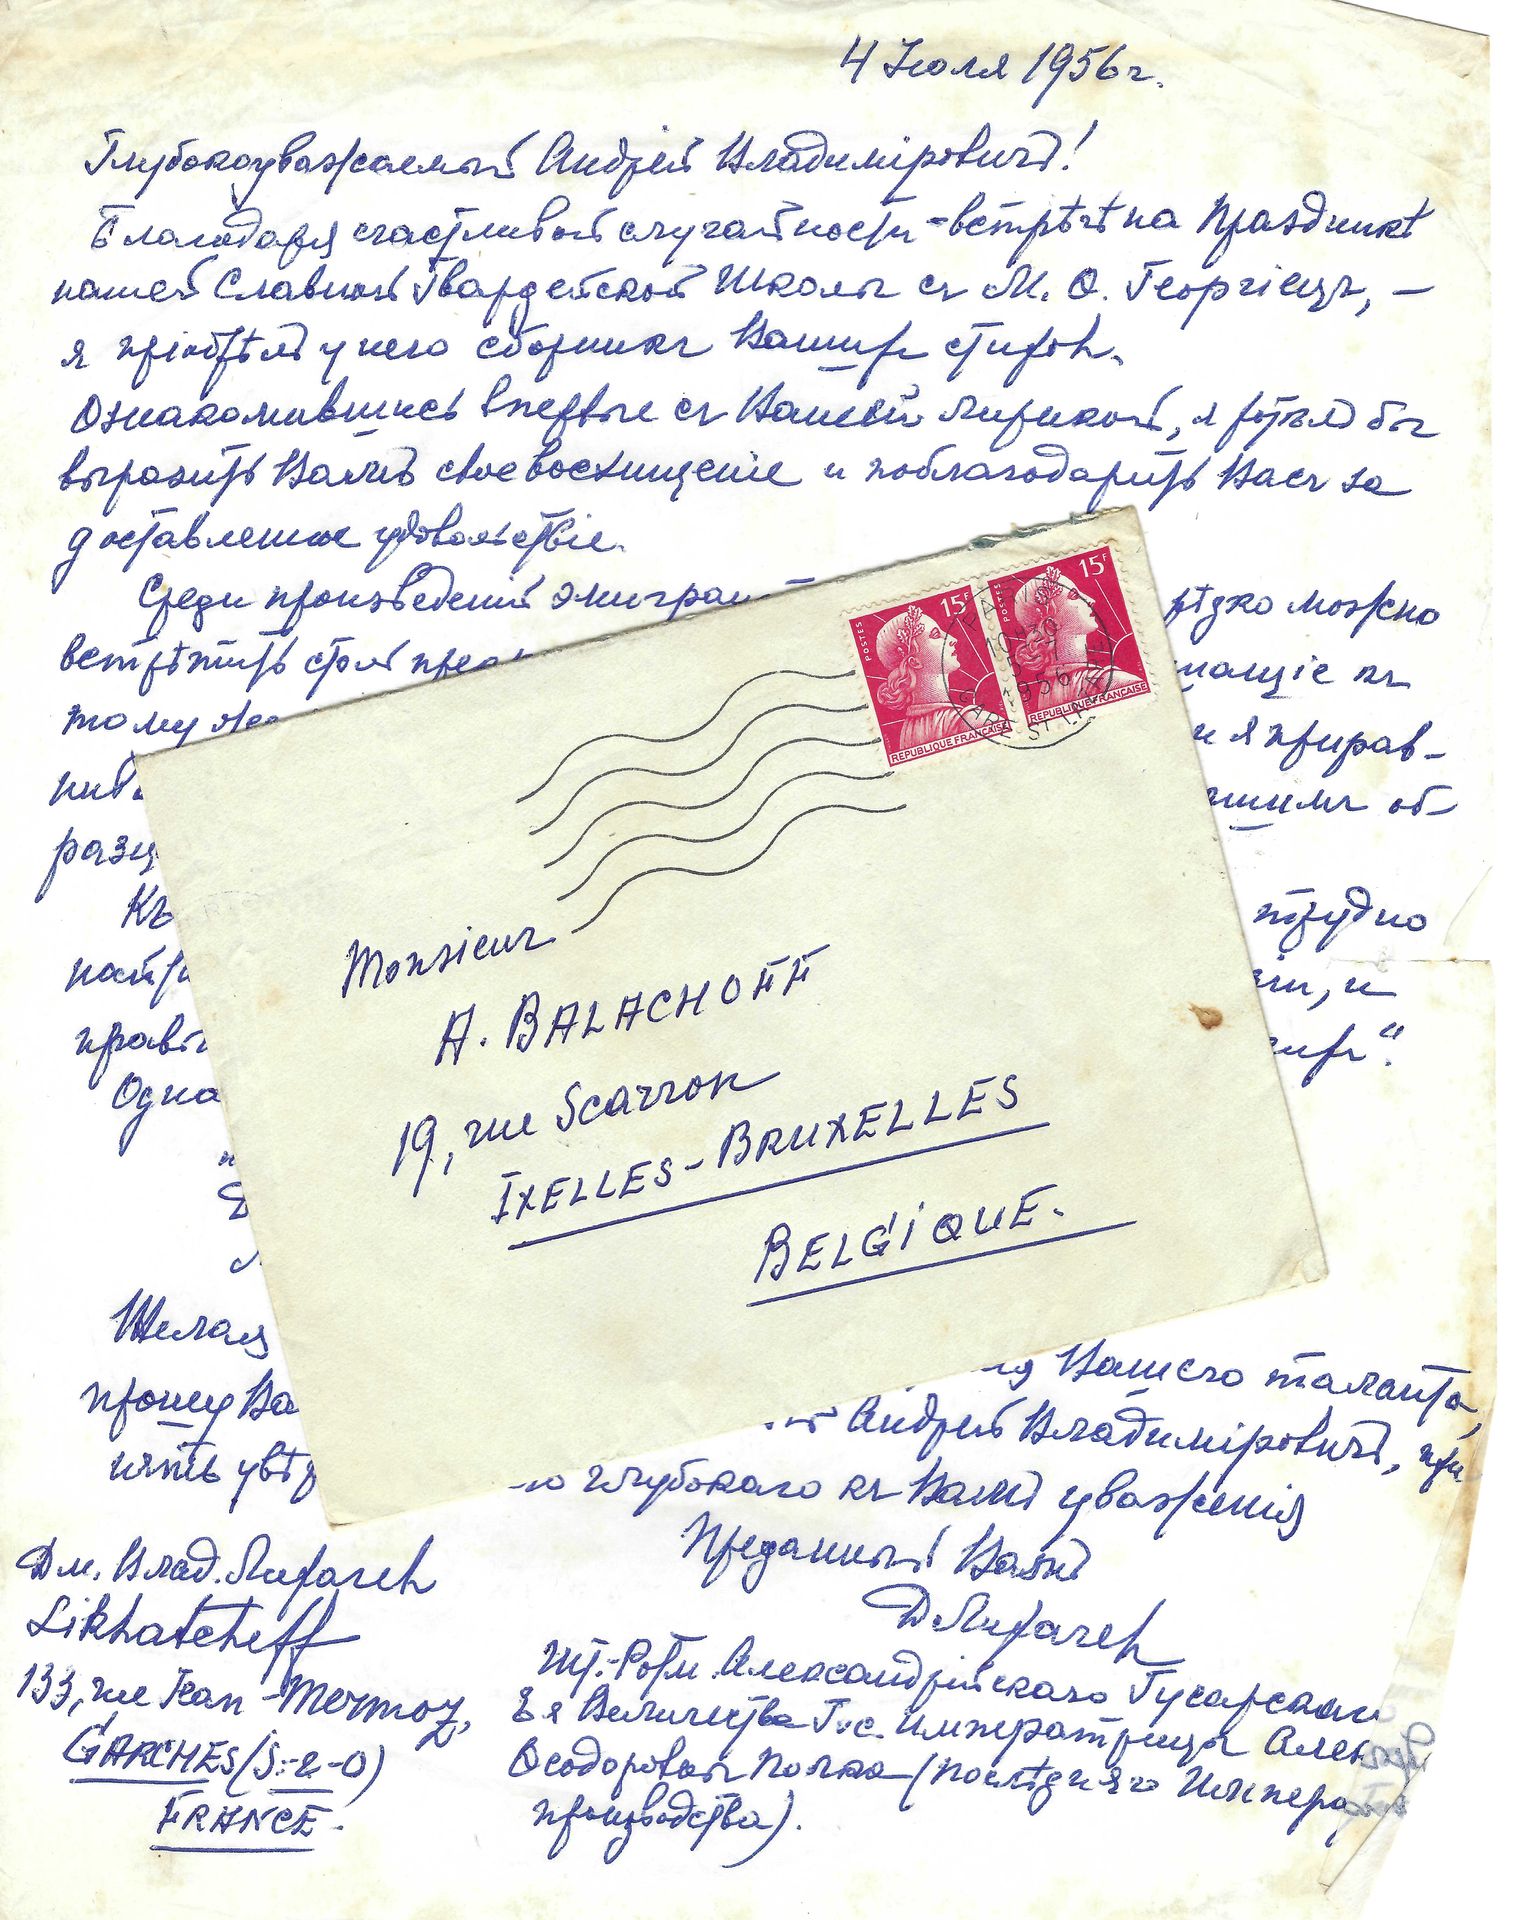 Null [伊兹姆斯基团]
安德烈-巴拉绍夫（1889-1969 年）档案馆
纳杰日丁-瓦迪姆，上校
比林斯基-谢尔盖（1986-1967 年），指挥家
马努伊&hellip;